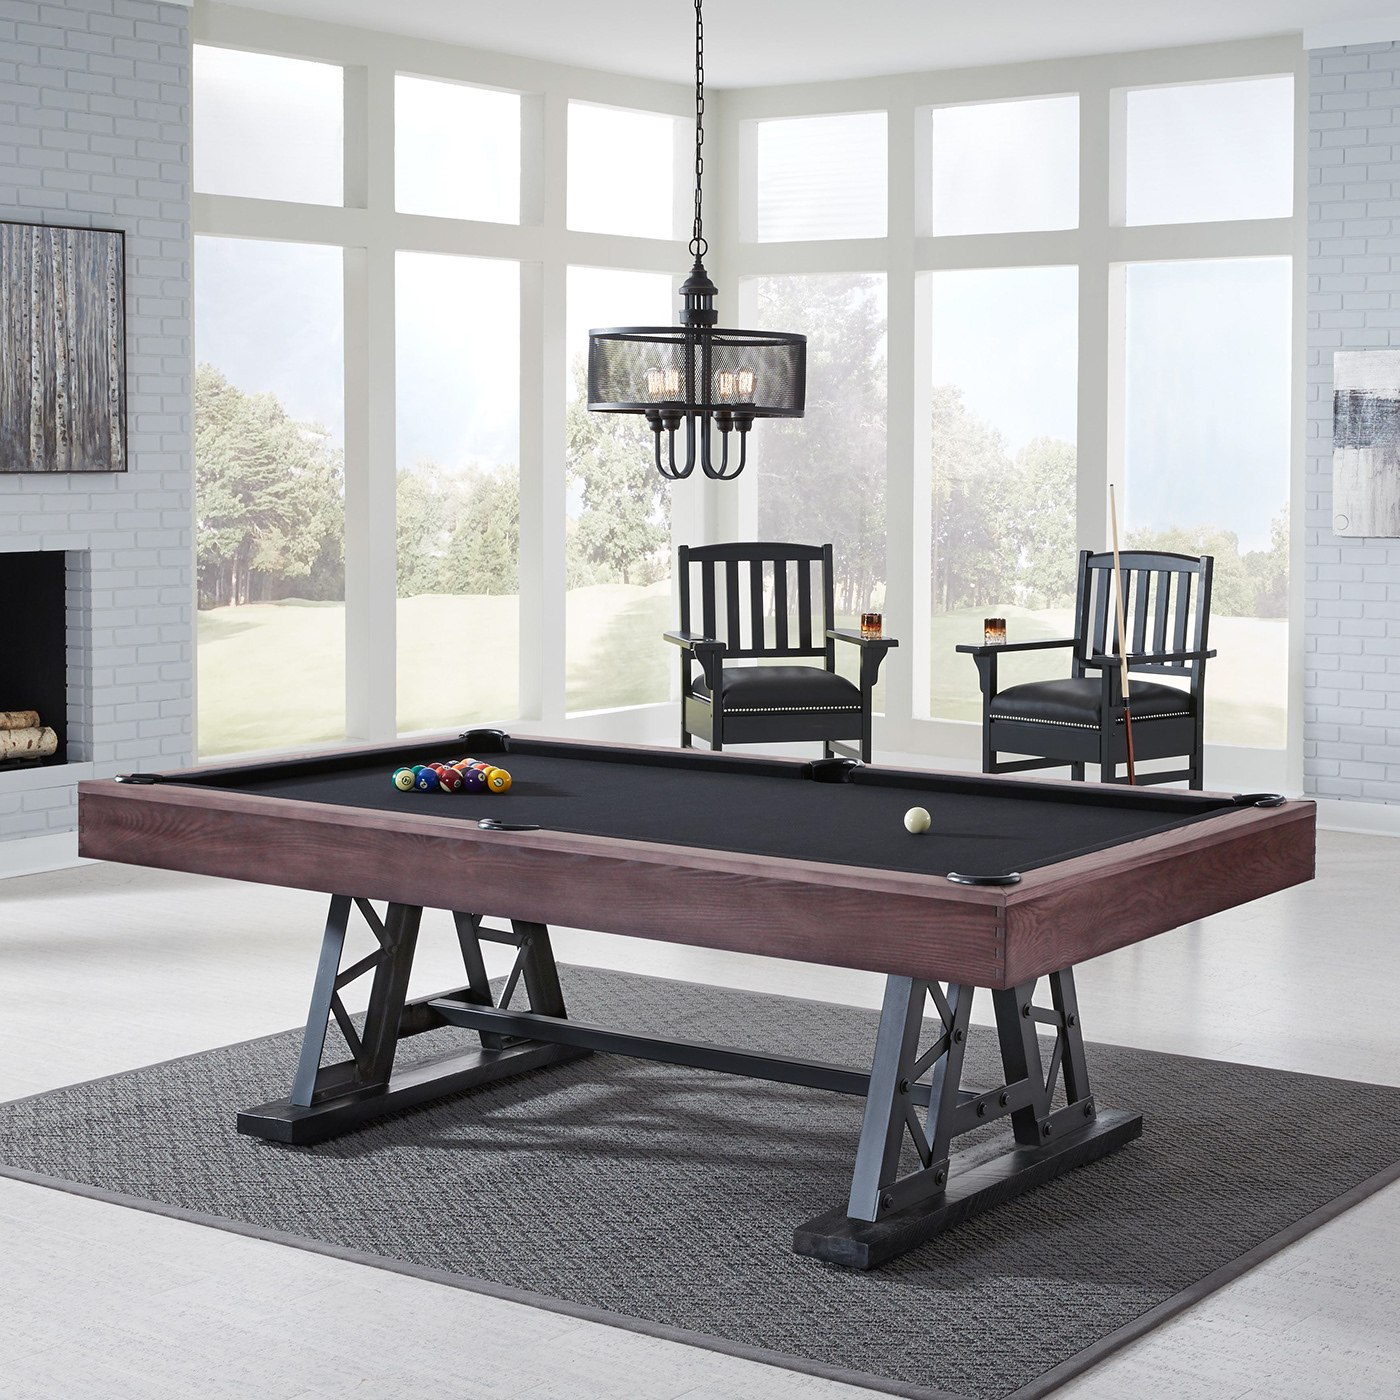 Pool billiards manufacturing product development industry gameroom